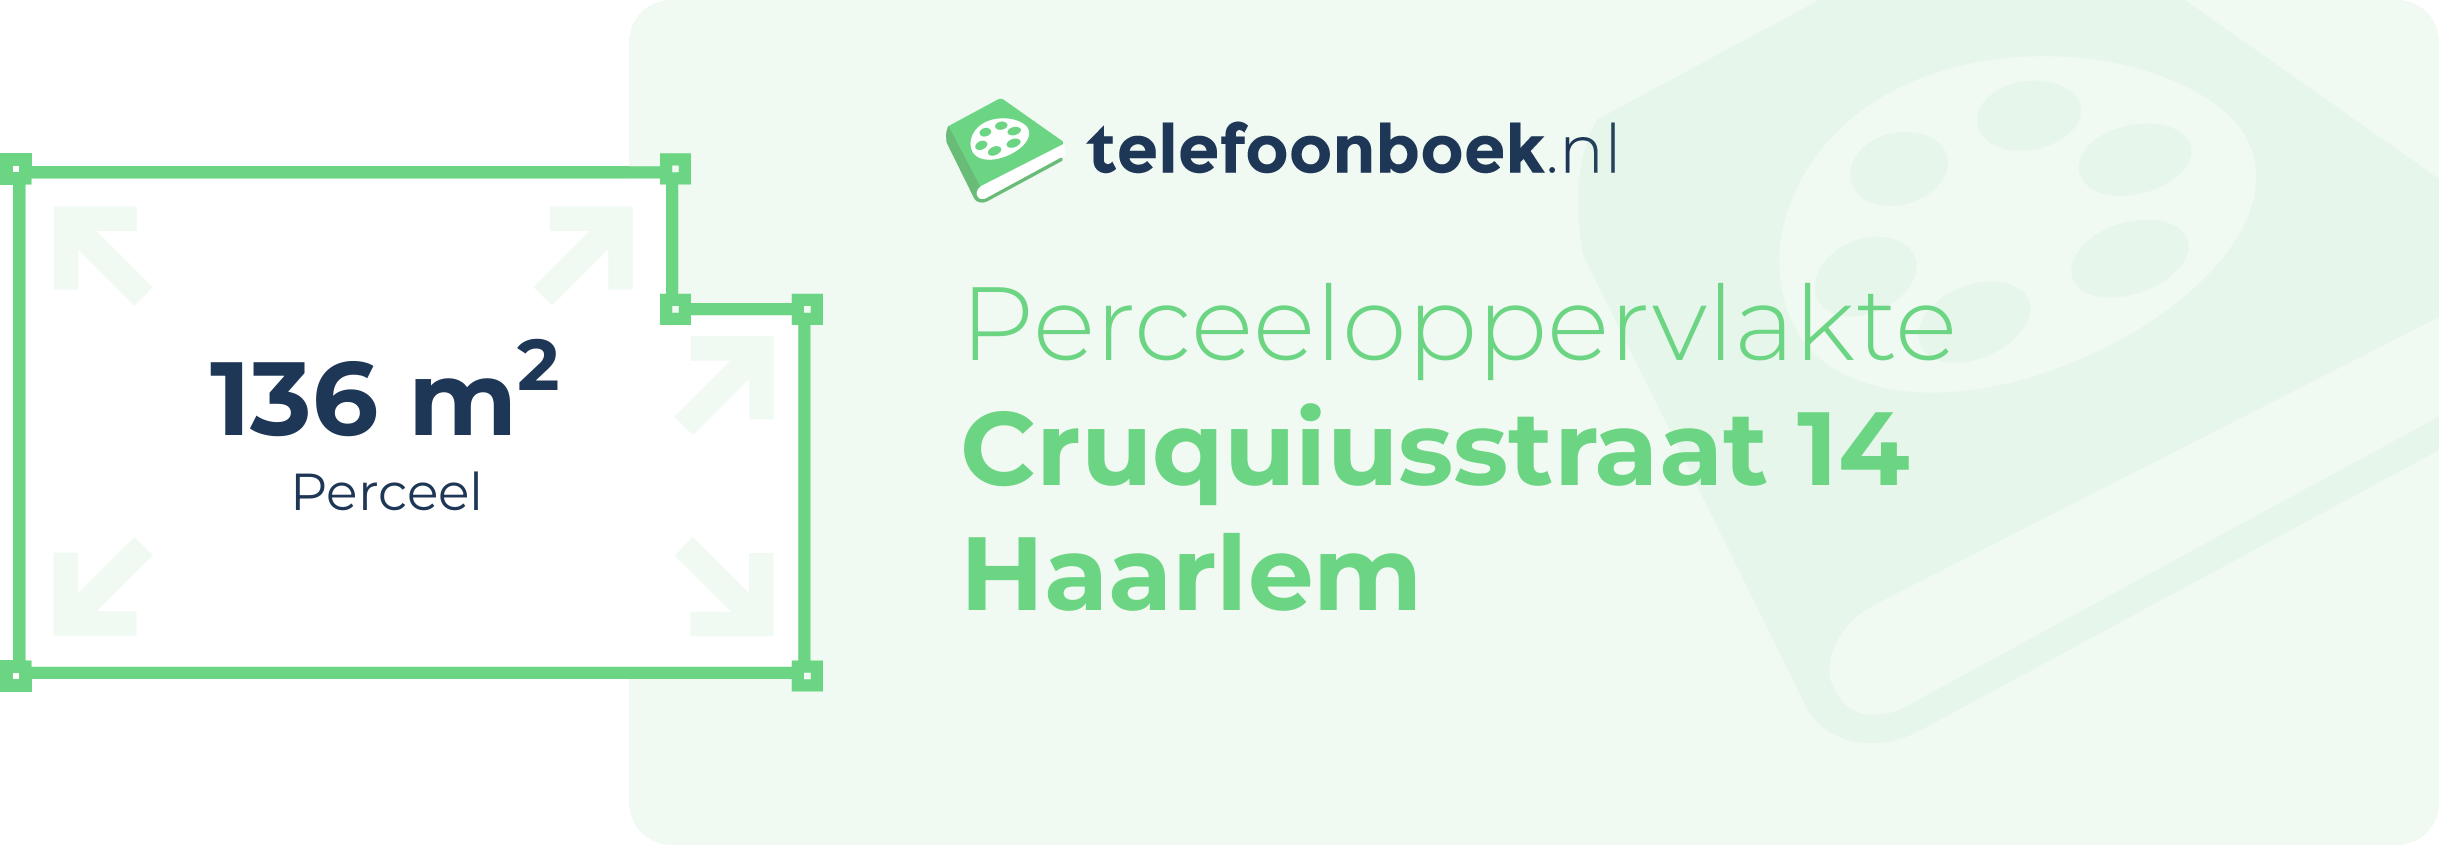 Perceeloppervlakte Cruquiusstraat 14 Haarlem